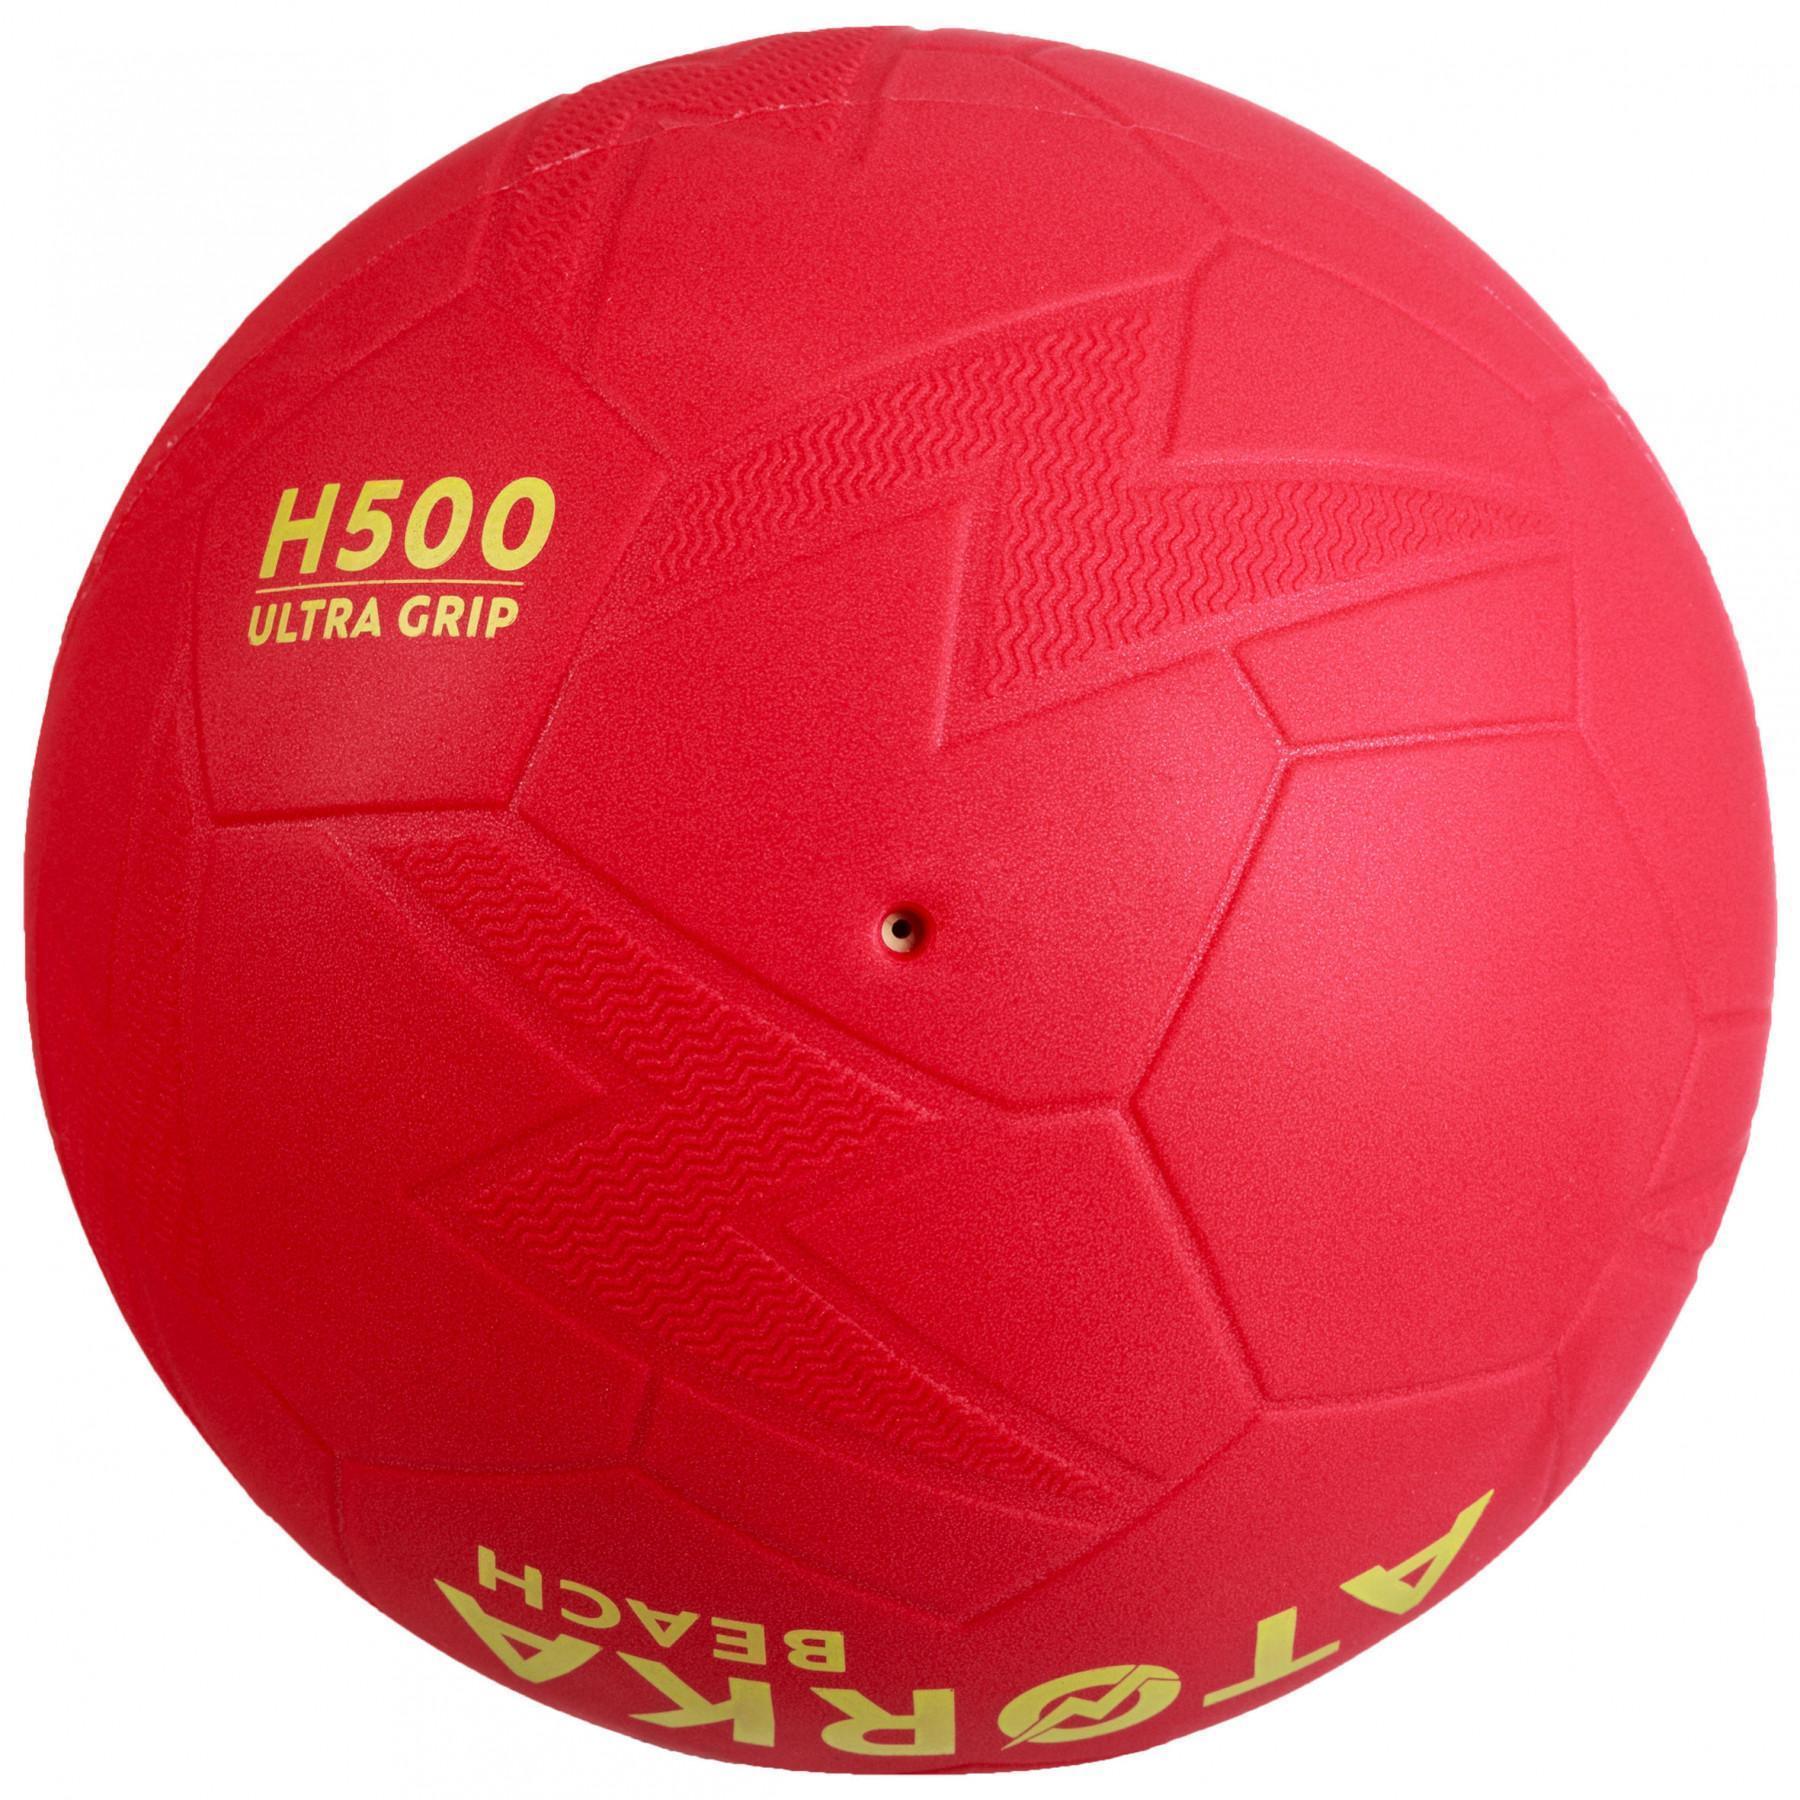 Beachhandball Atorka HB500B - Taille 2